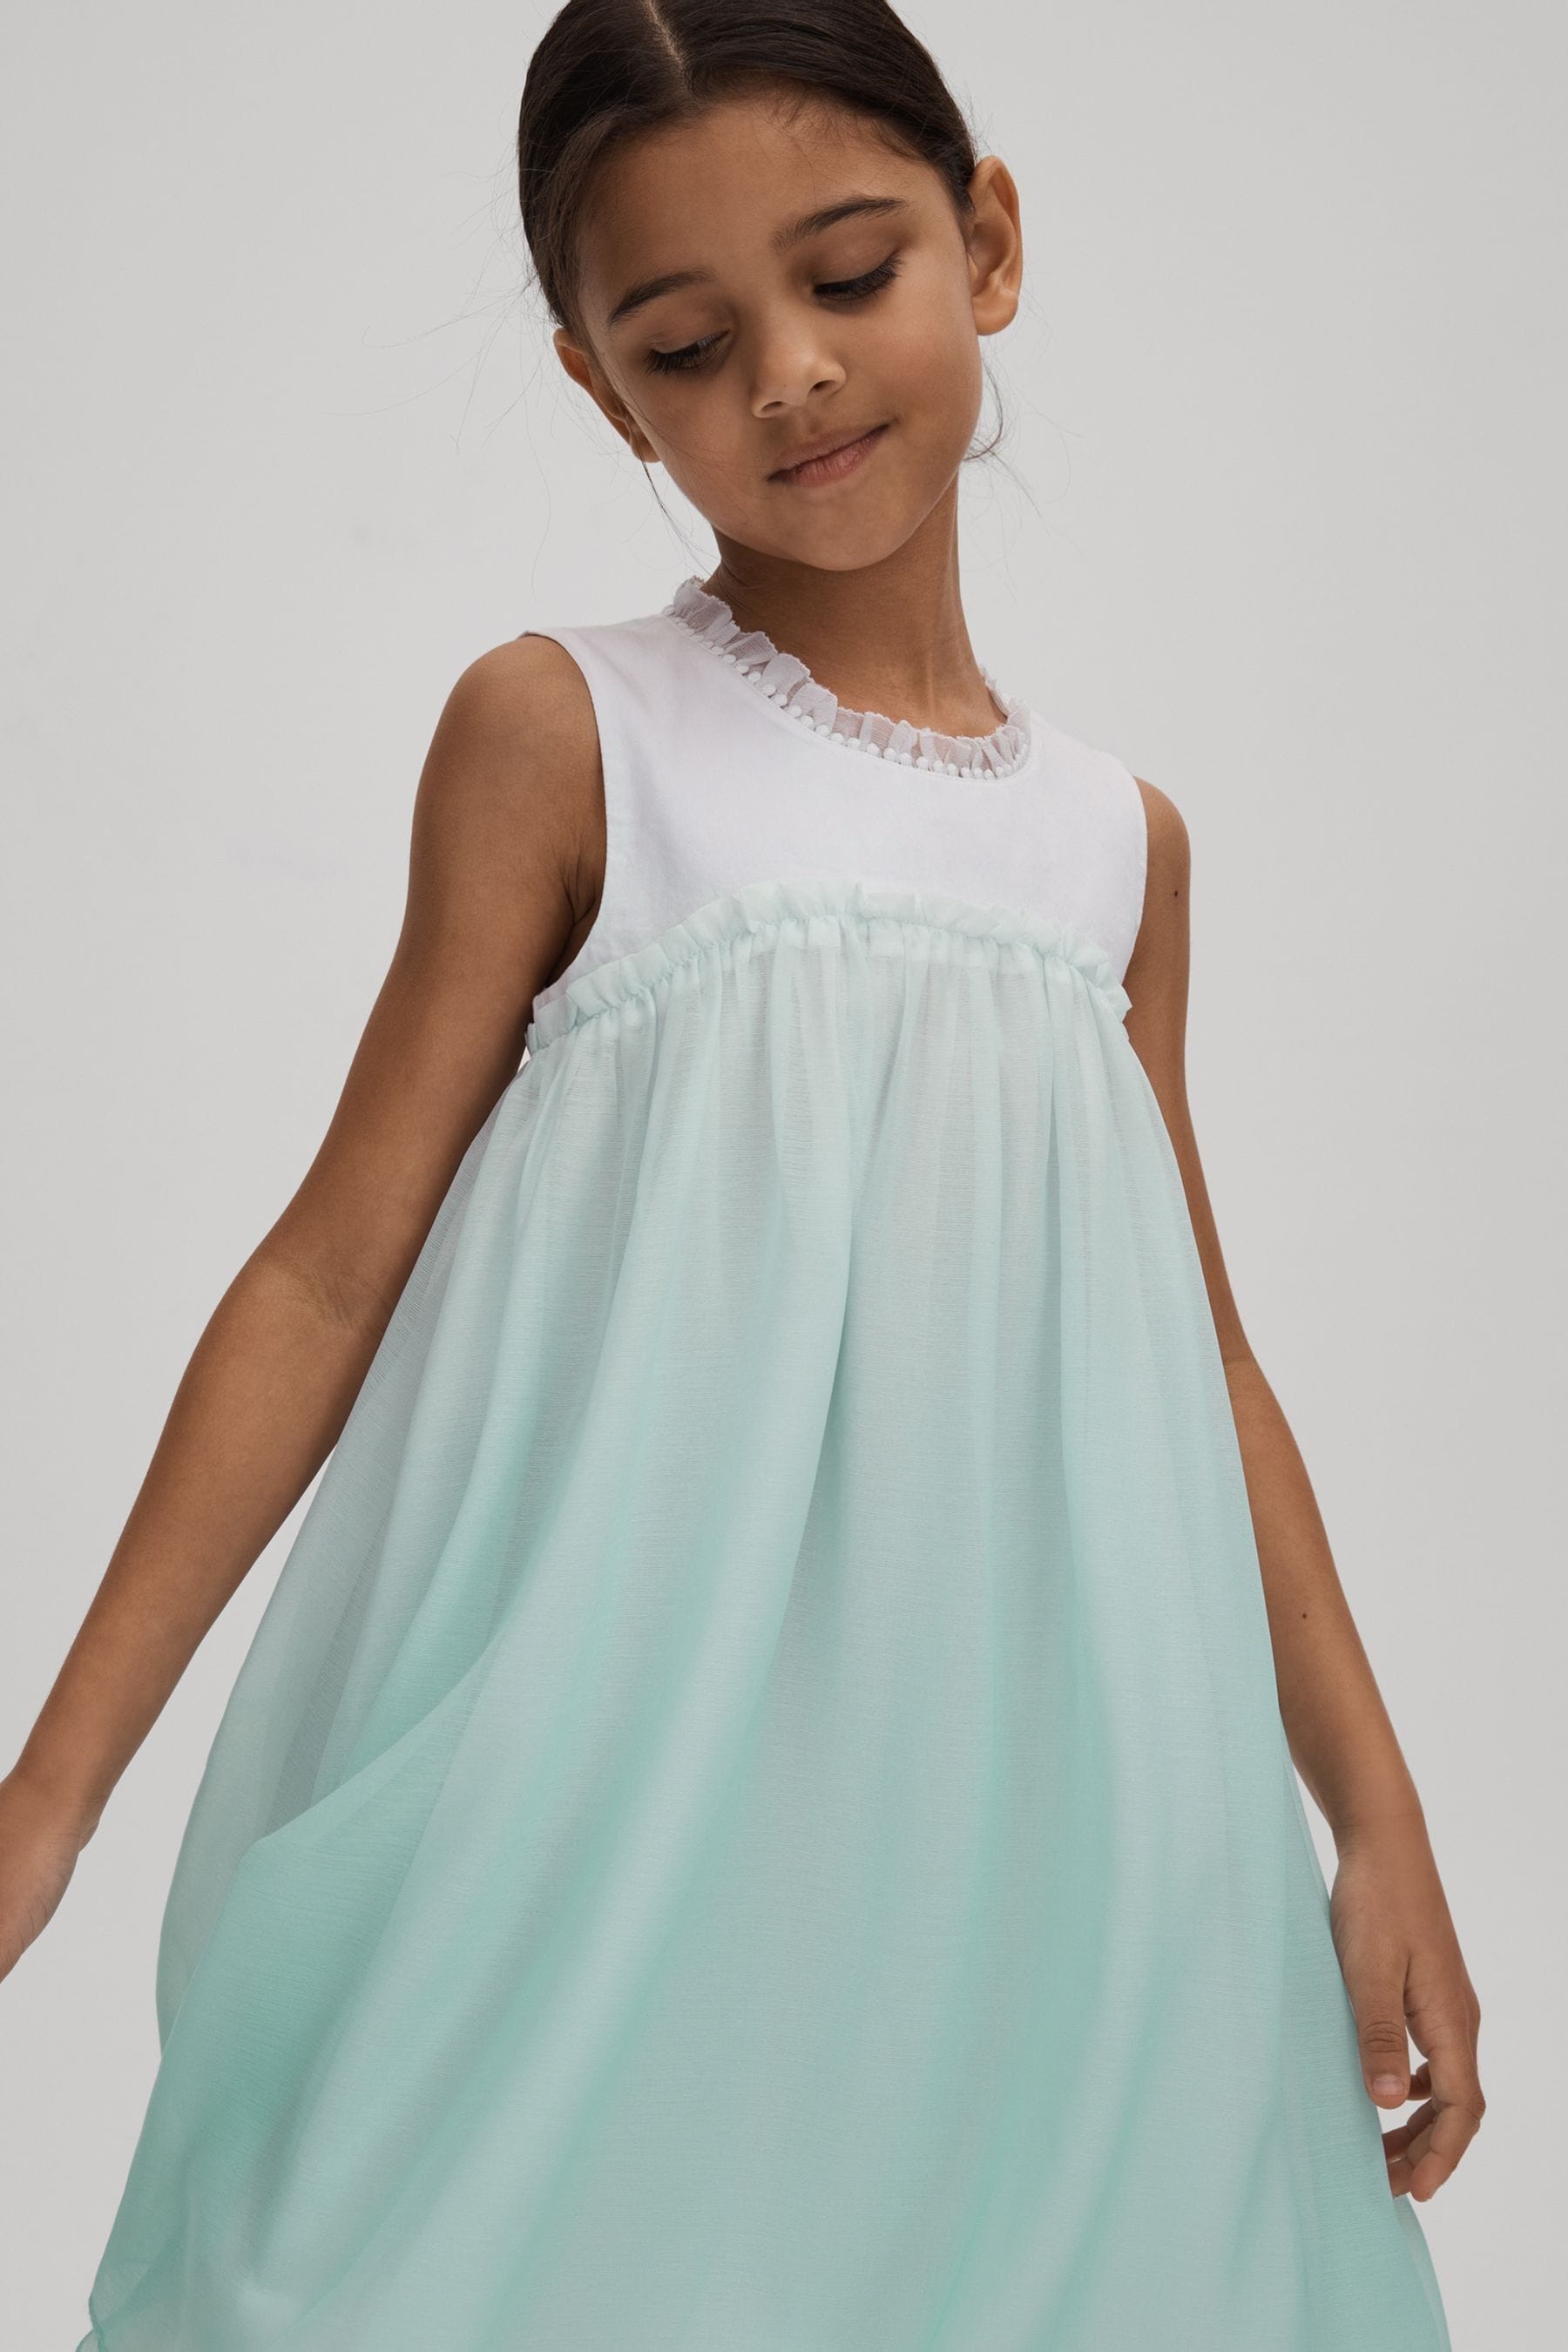 Reiss Kids' Coco - Blue Senior Ombre Tulle Dress, Uk 9-10 Yrs